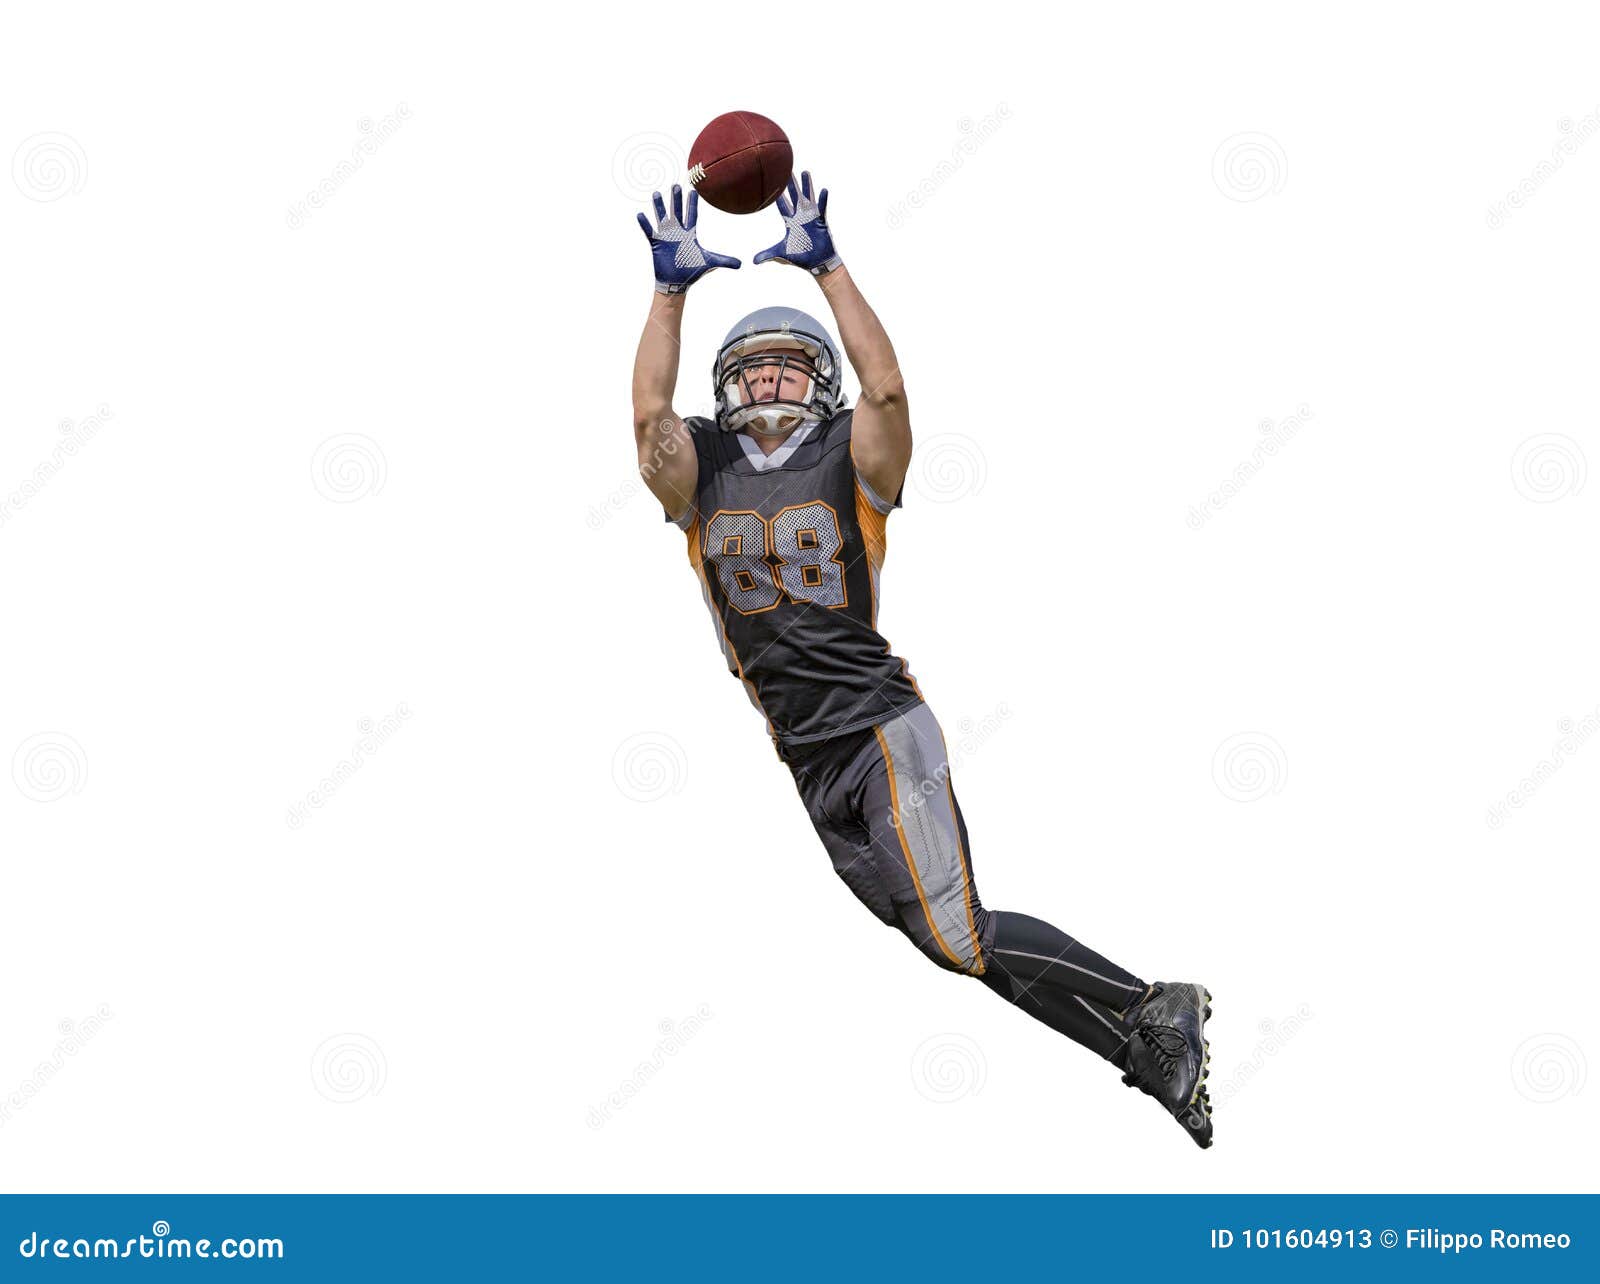 american football player catching ball 